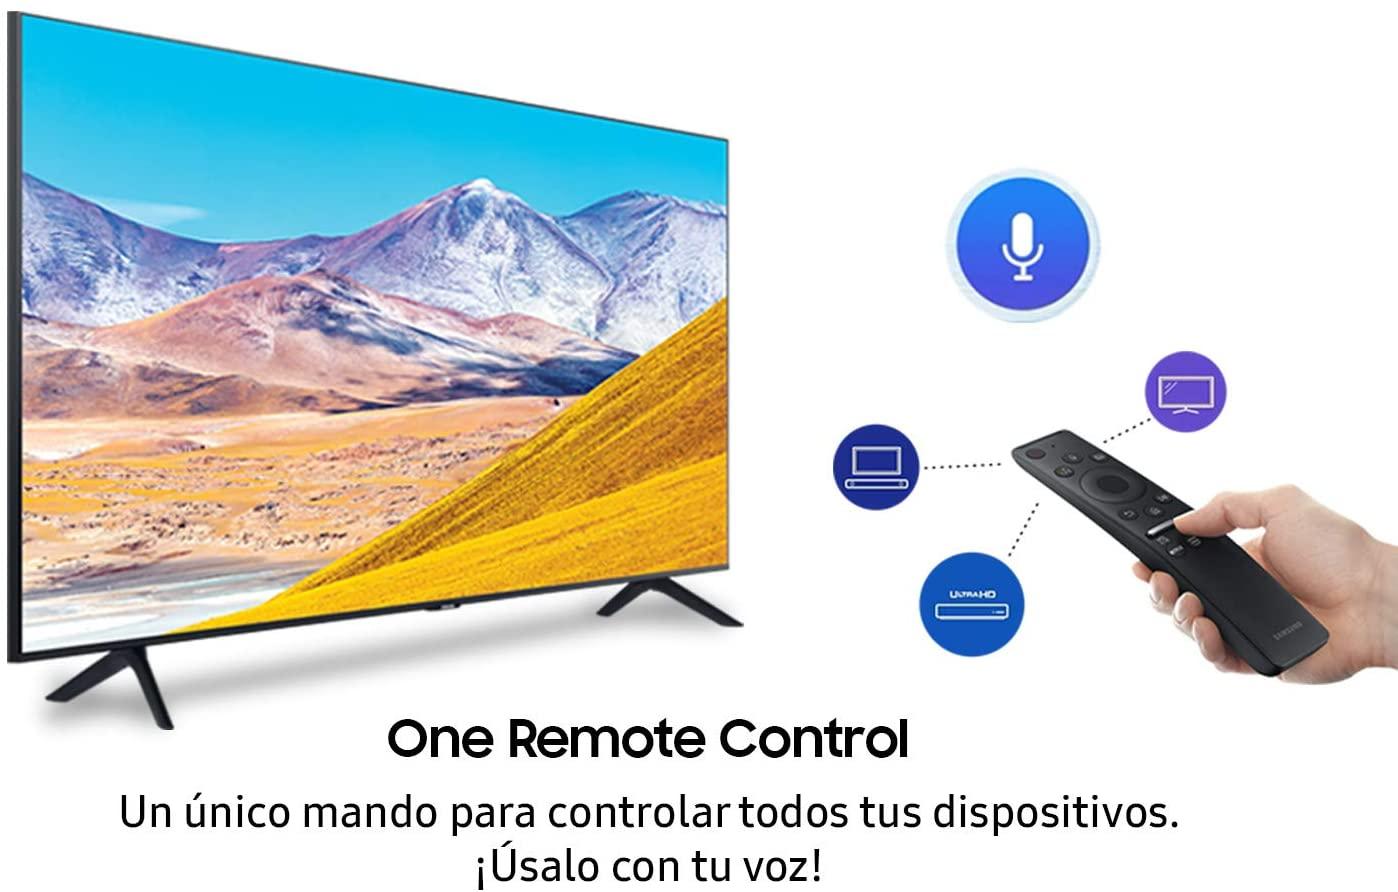 Smart TV Samsung Crystal UHD 2020 55TU8005